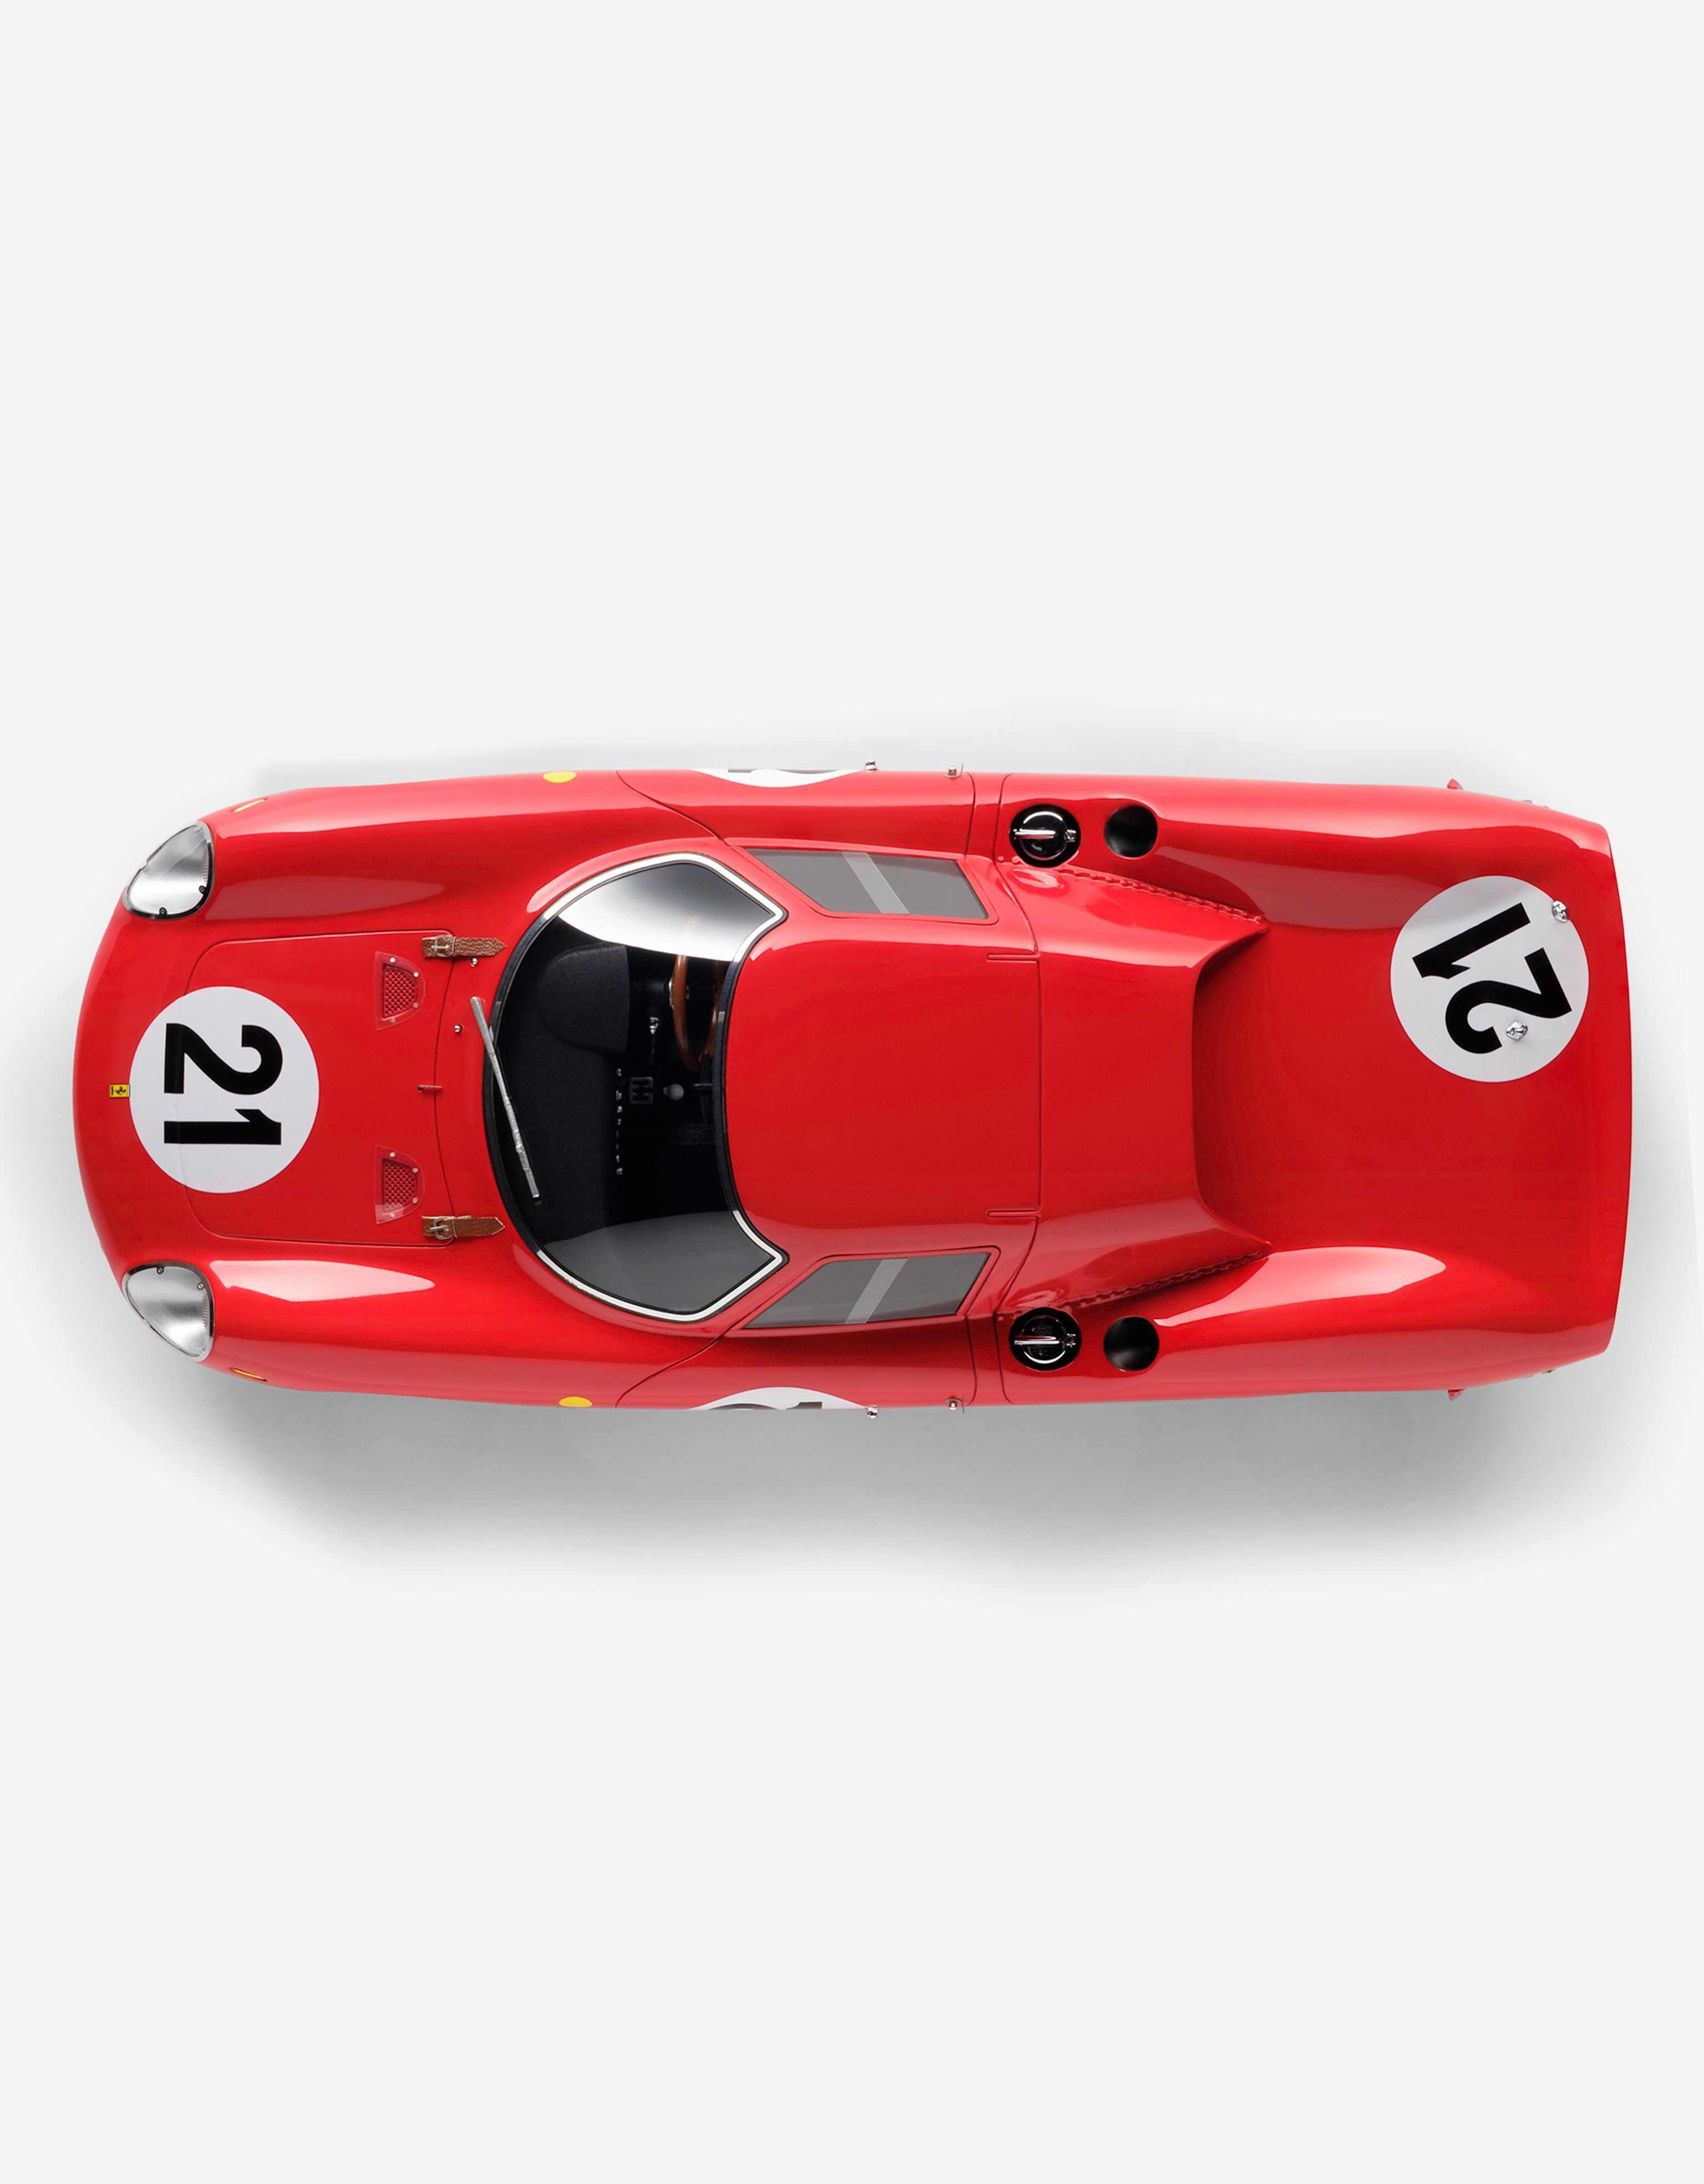 Ferrari 250 LM 1965 Le Mans model in 1:18 scale